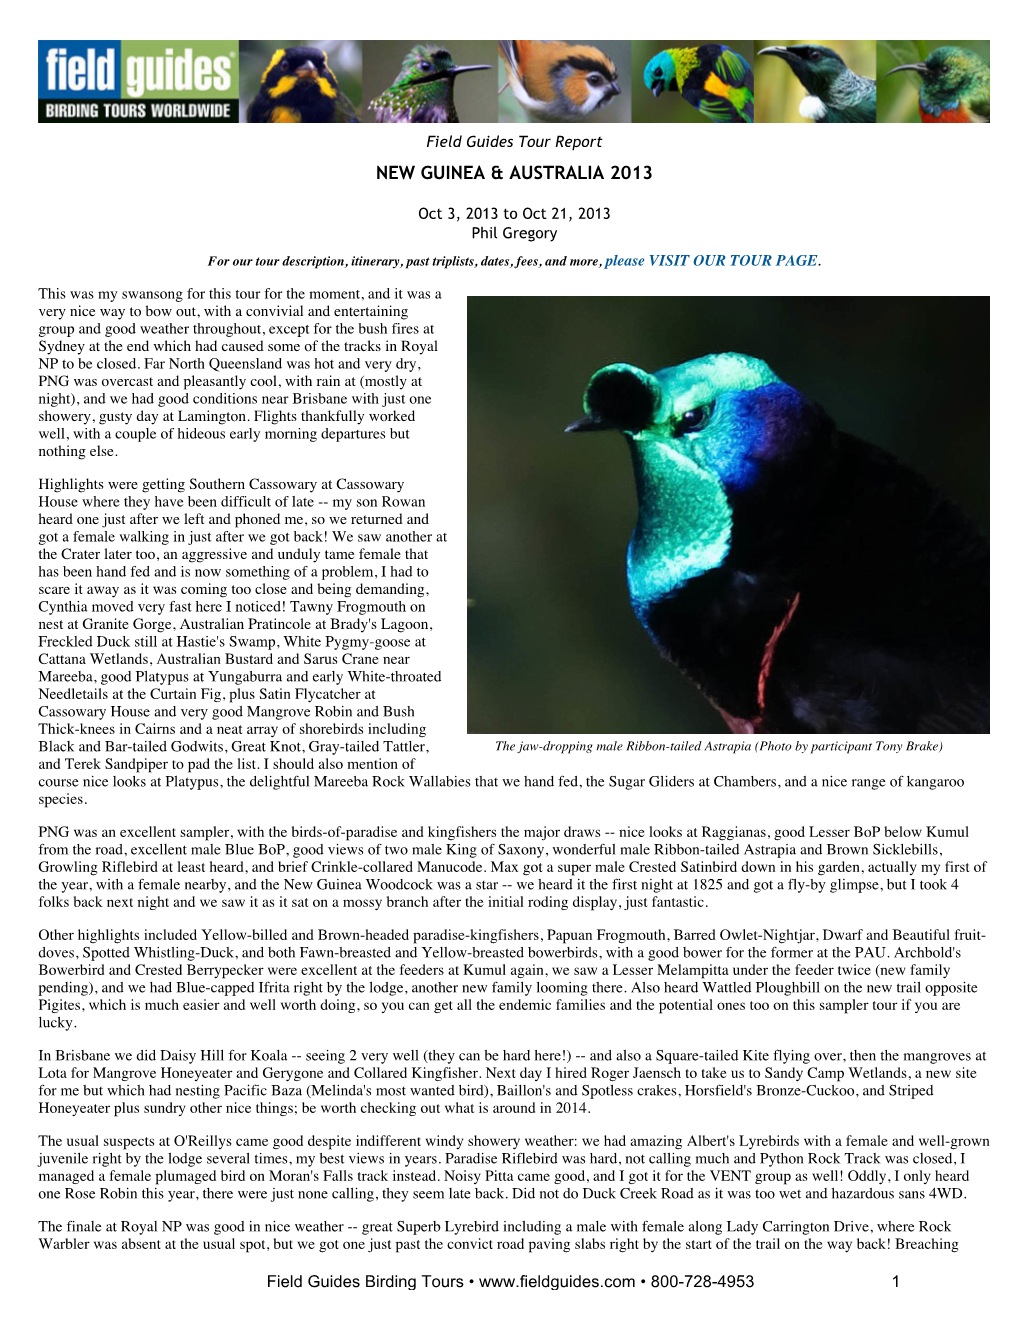 Field Guides Birding Tours: New Guinea & Australia 2013